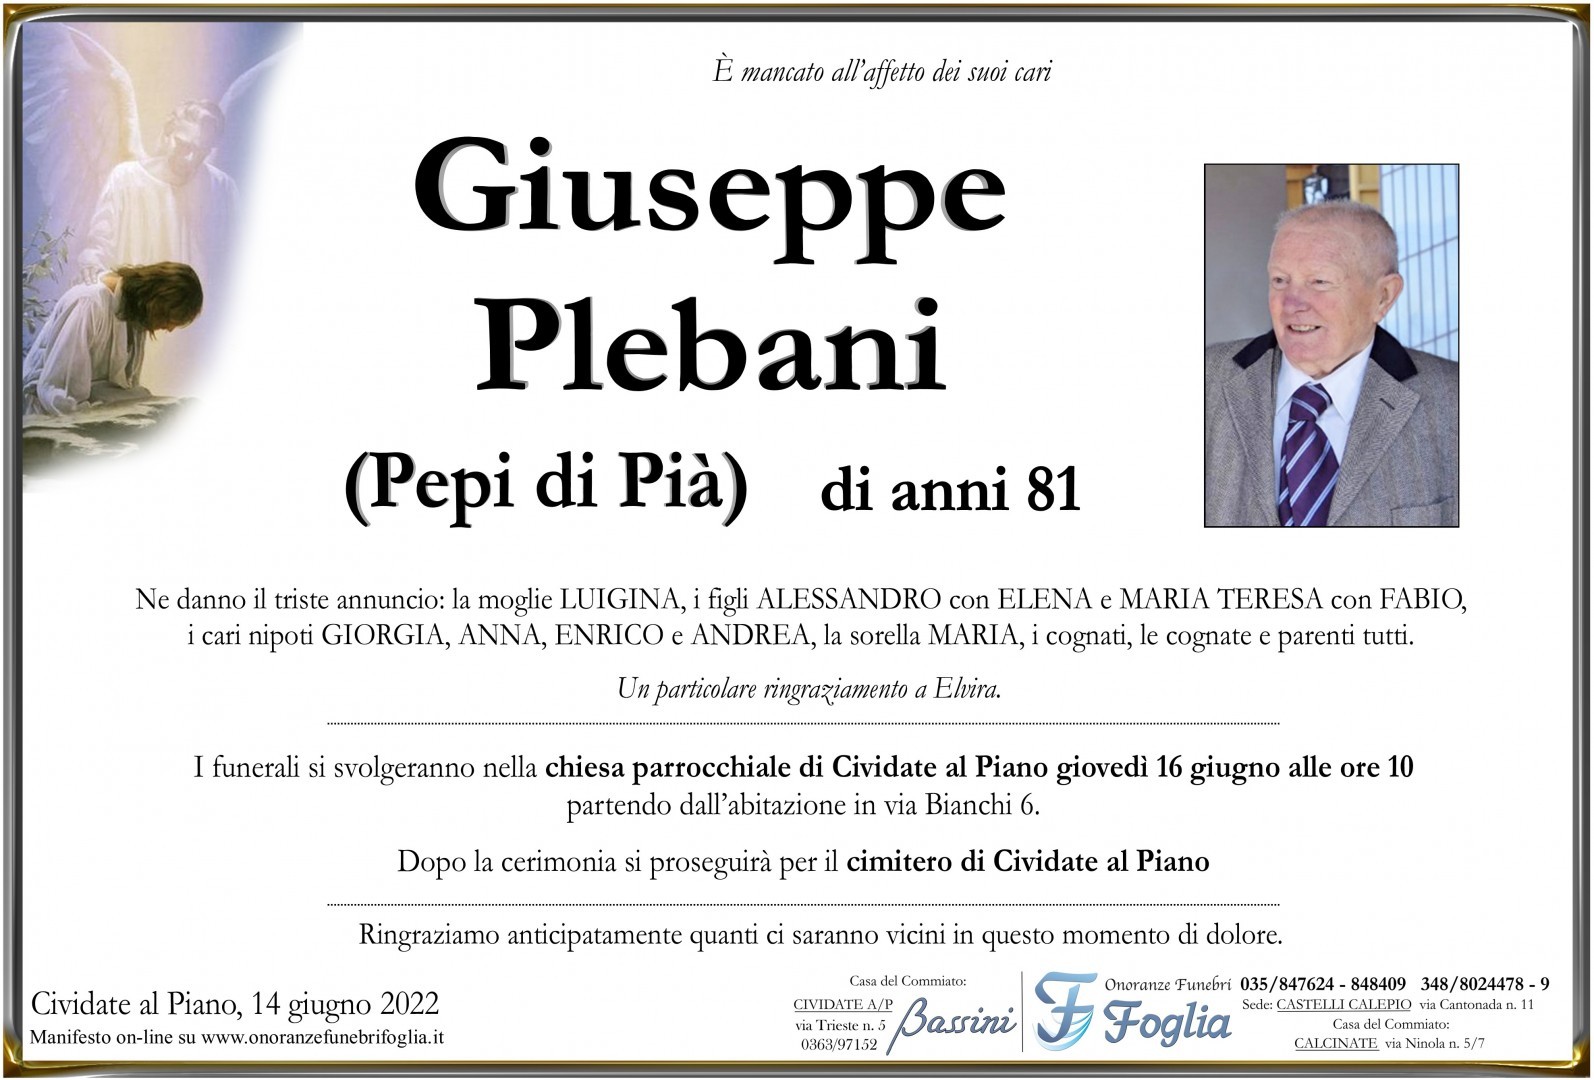 Giuseppe Plebani